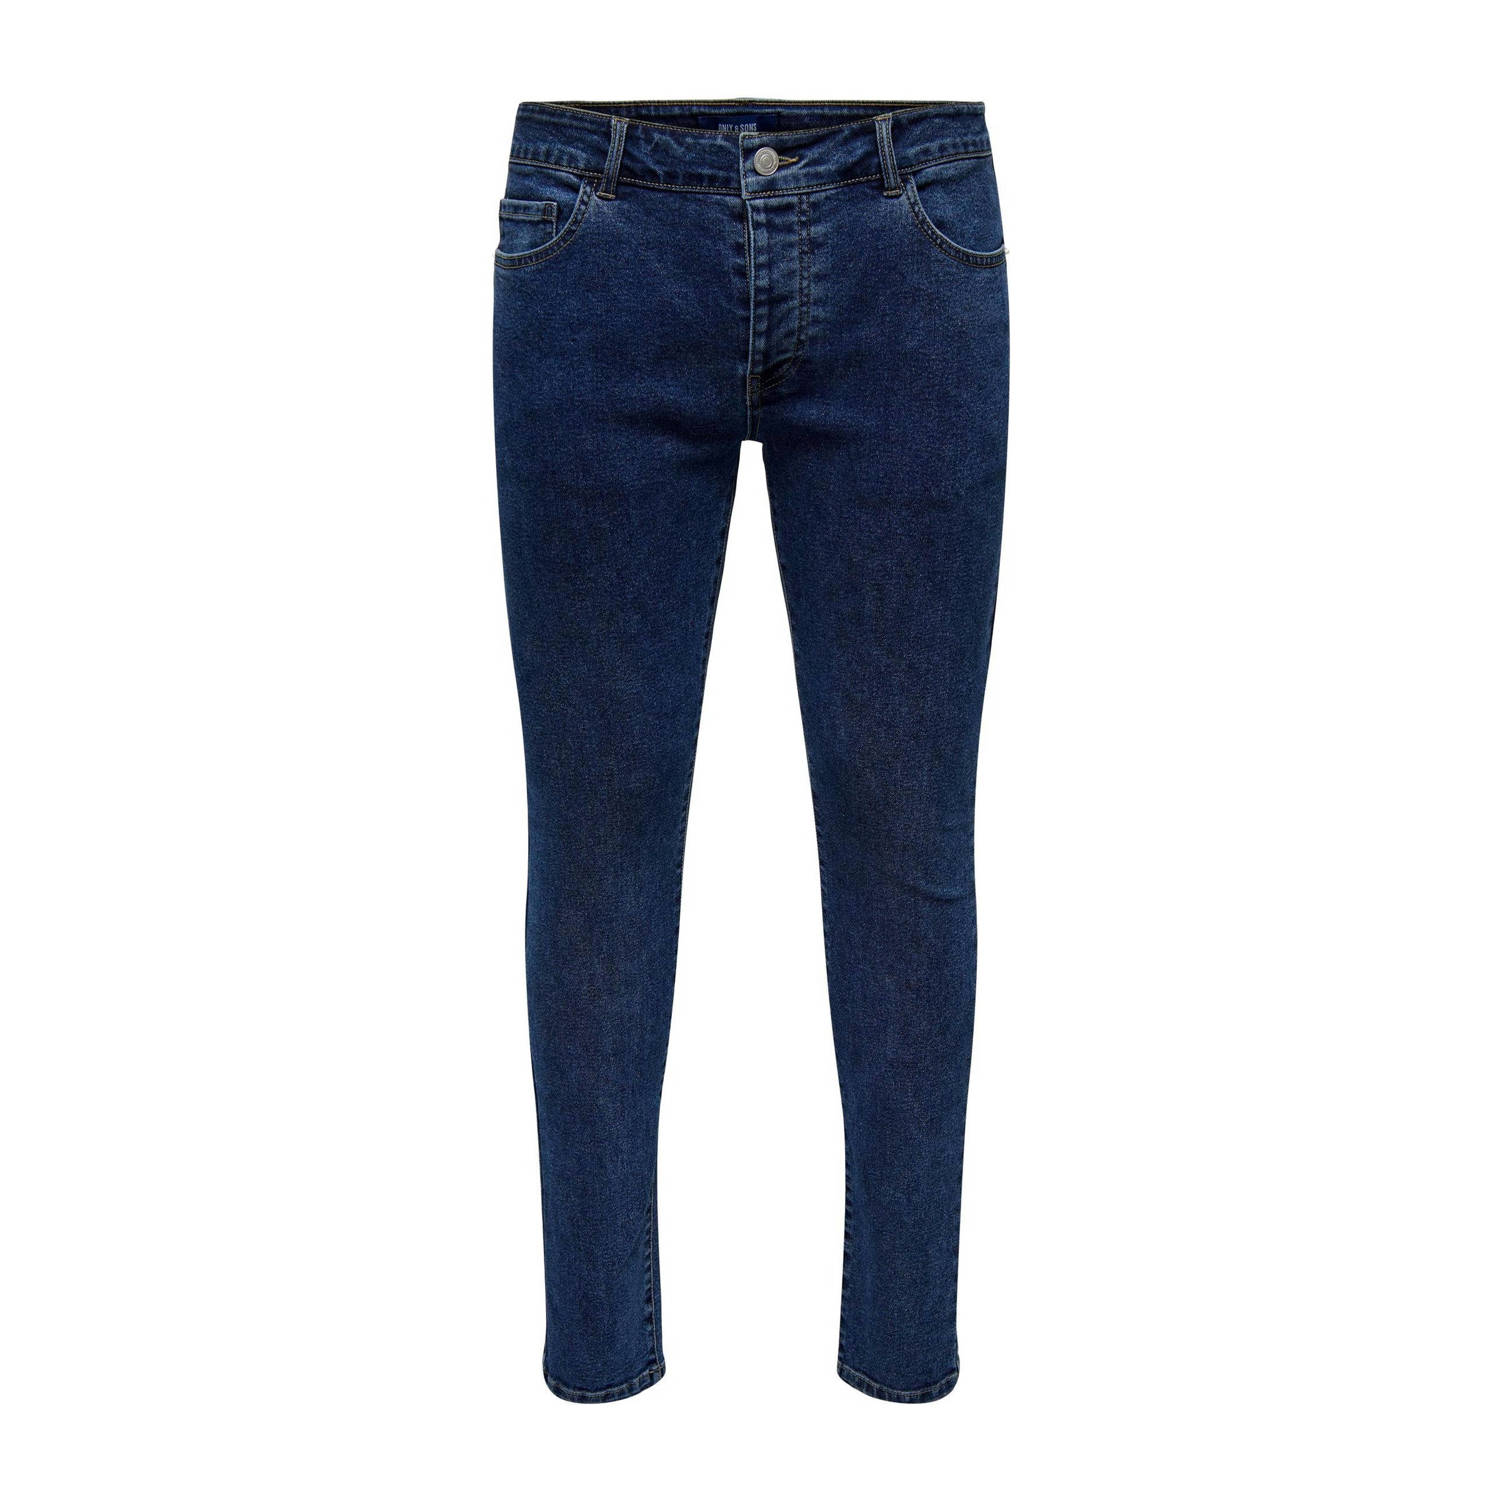 ONLY & SONS skinny jeans ONSWARP 7986 medium blue denim